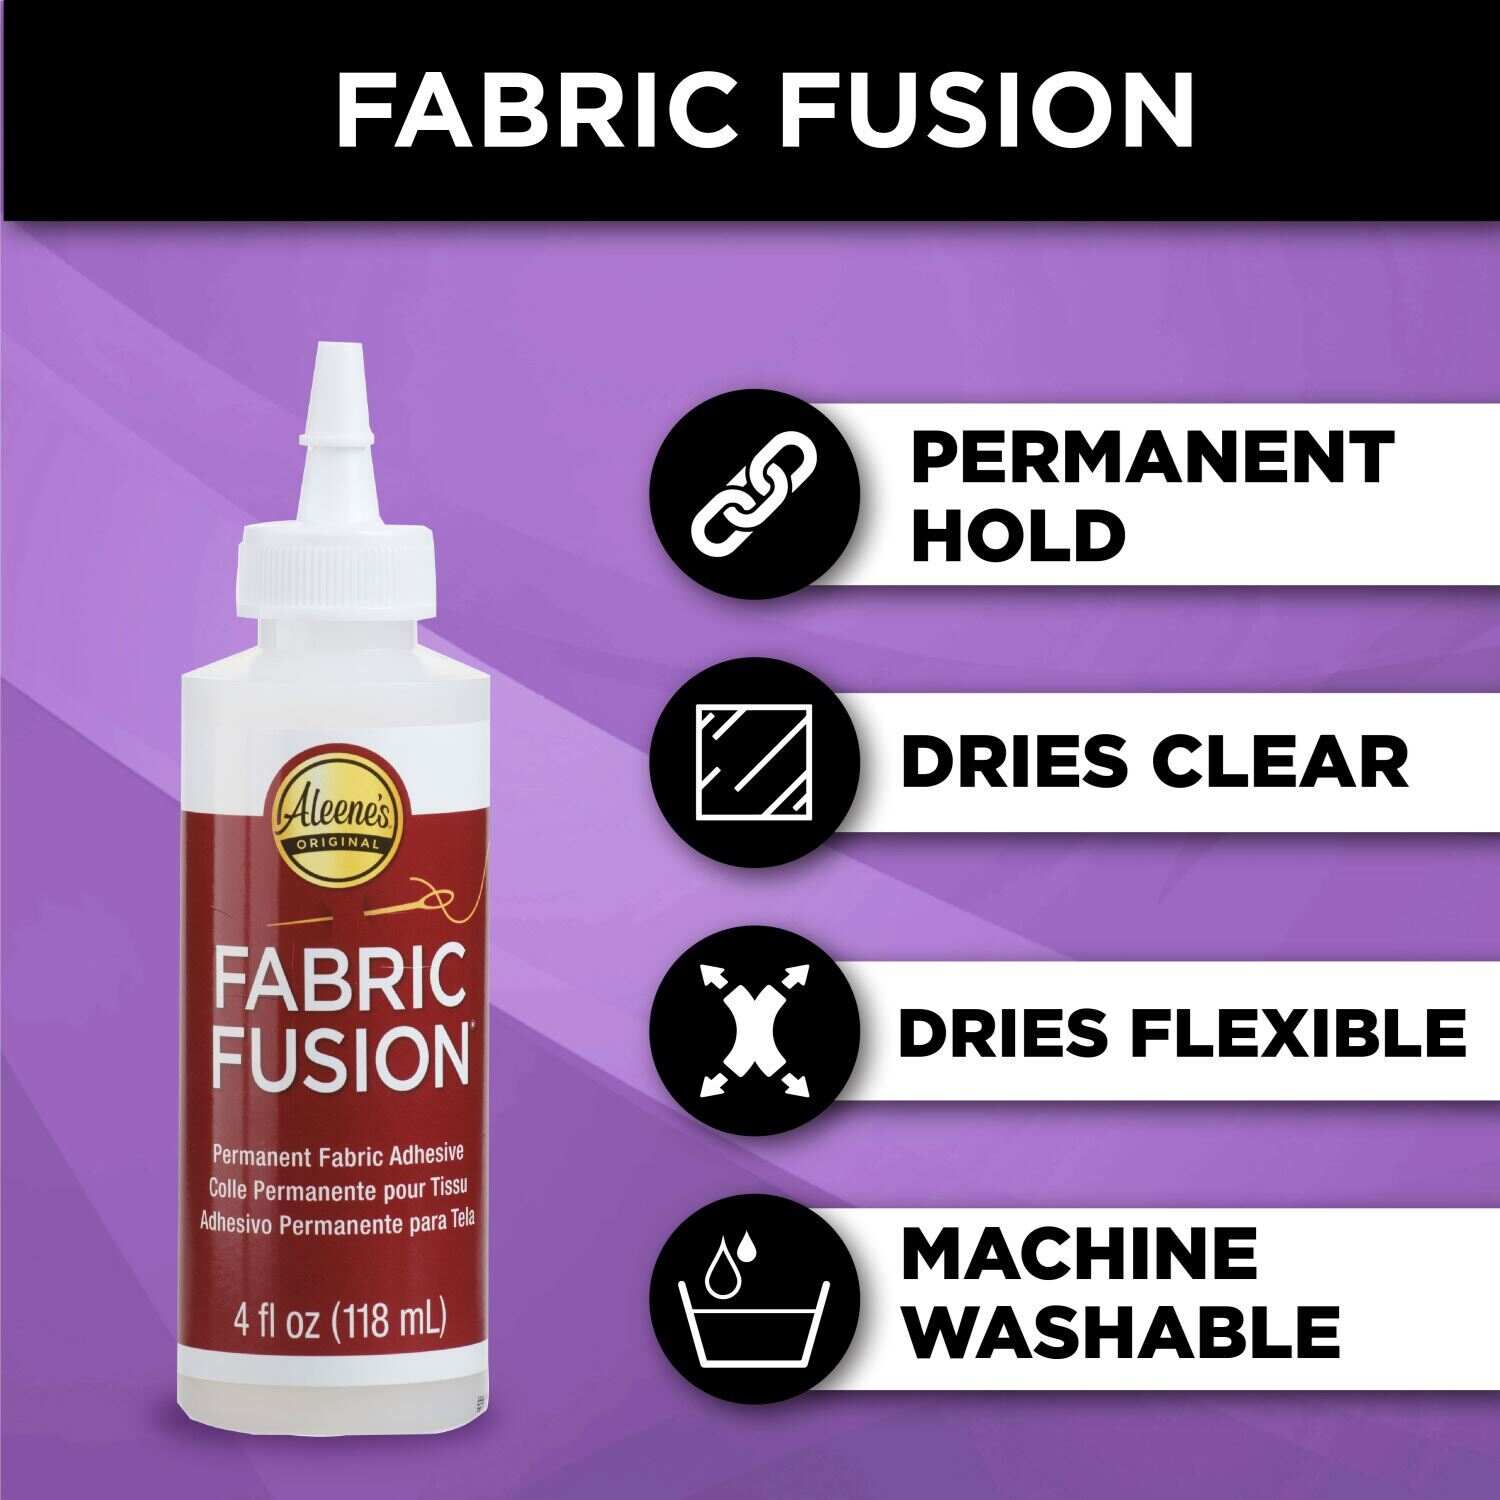 Adhésif permanent pour tissus Fabric Fusion d'Aleene 8 fl oz Adhésif textile  permanent 